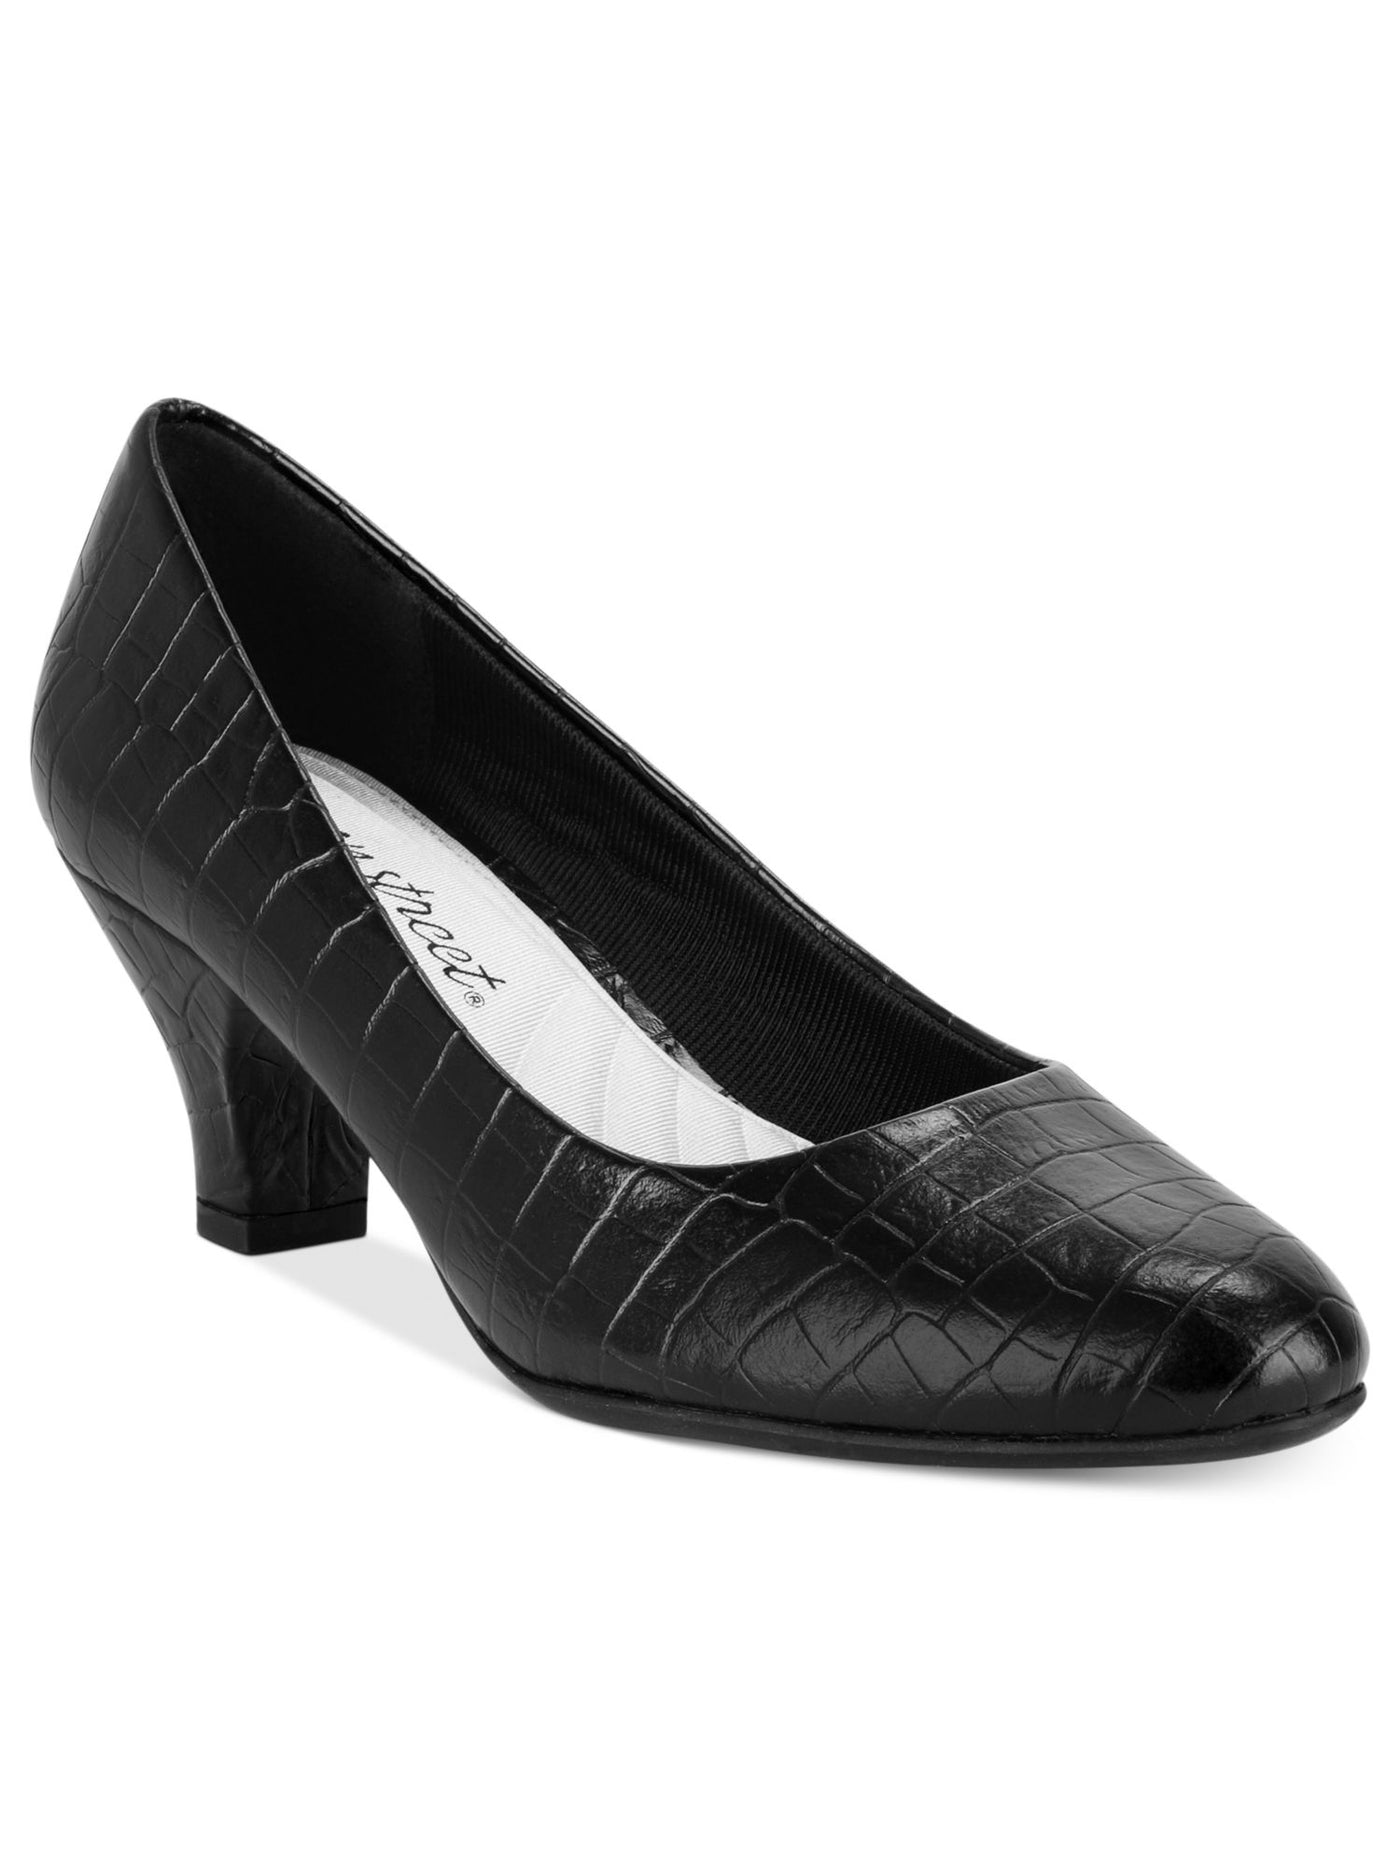 EASY STREET Womens Black Crocodile Embossed Cushioned Fabulous Round Toe Block Heel Slip On Dress Pumps Shoes 9.5 N